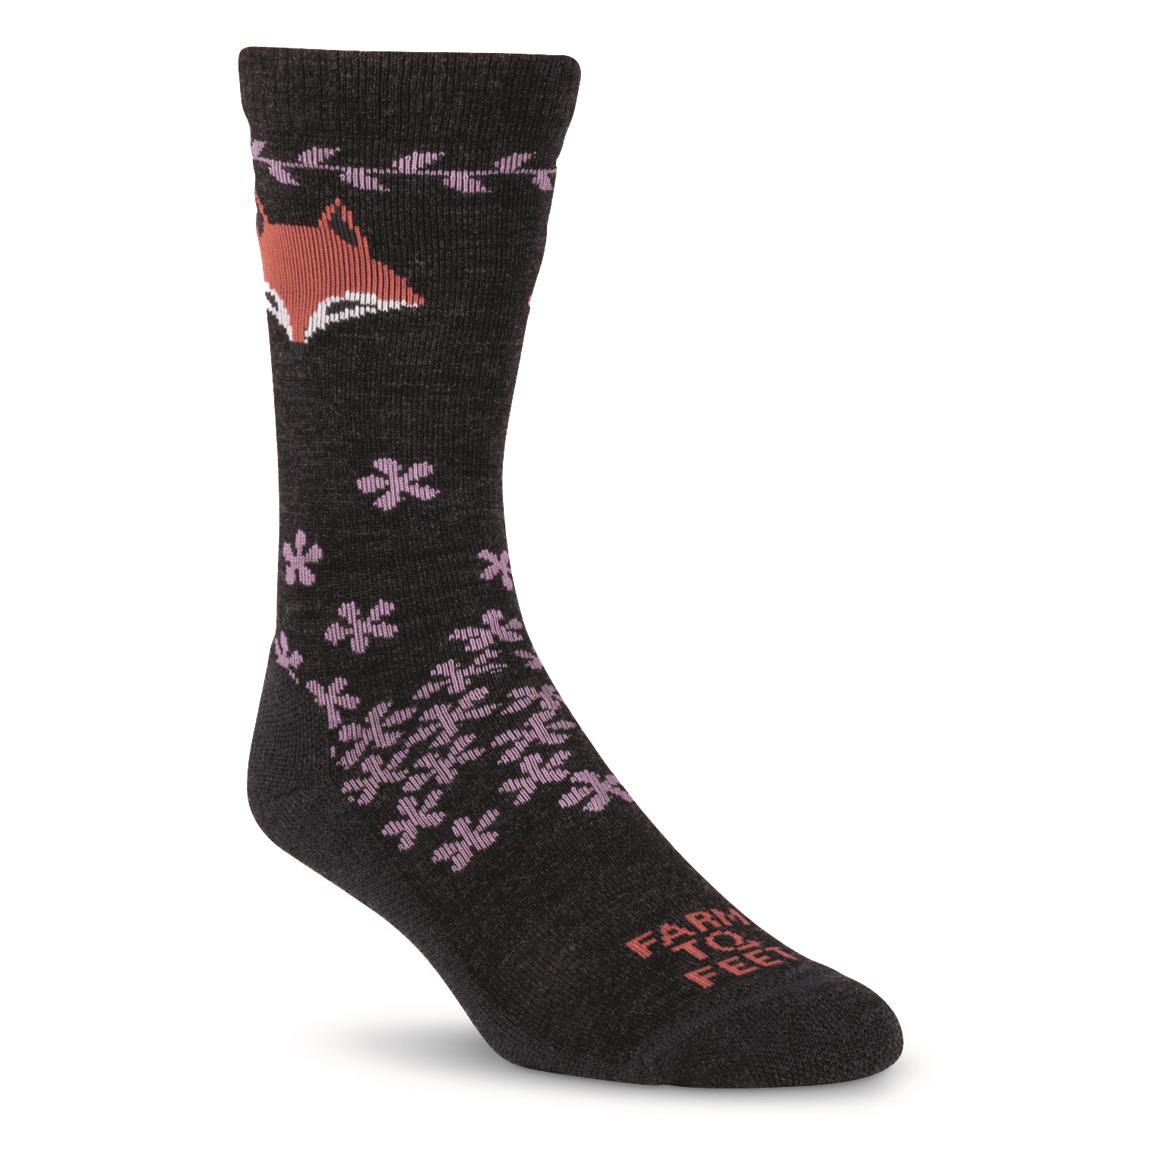 Farm to Feet Women's Emeryville Socks, Charcoal